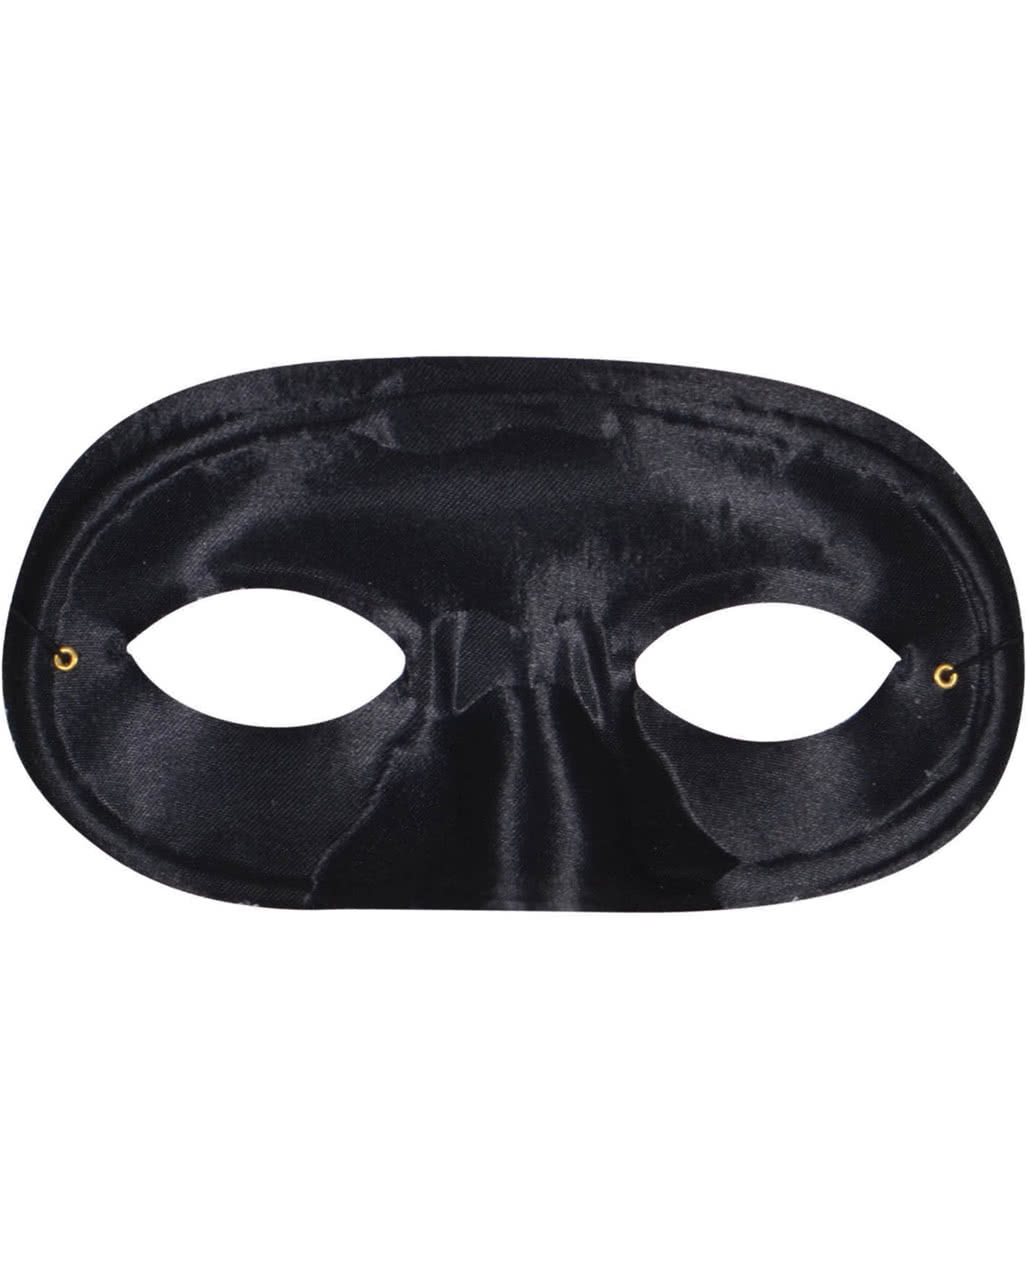 Gooey synoniemenlijst Uitrusten Zorro Mask Black Round Shape | Bandit Mask for Carnival | Horror-Shop.com